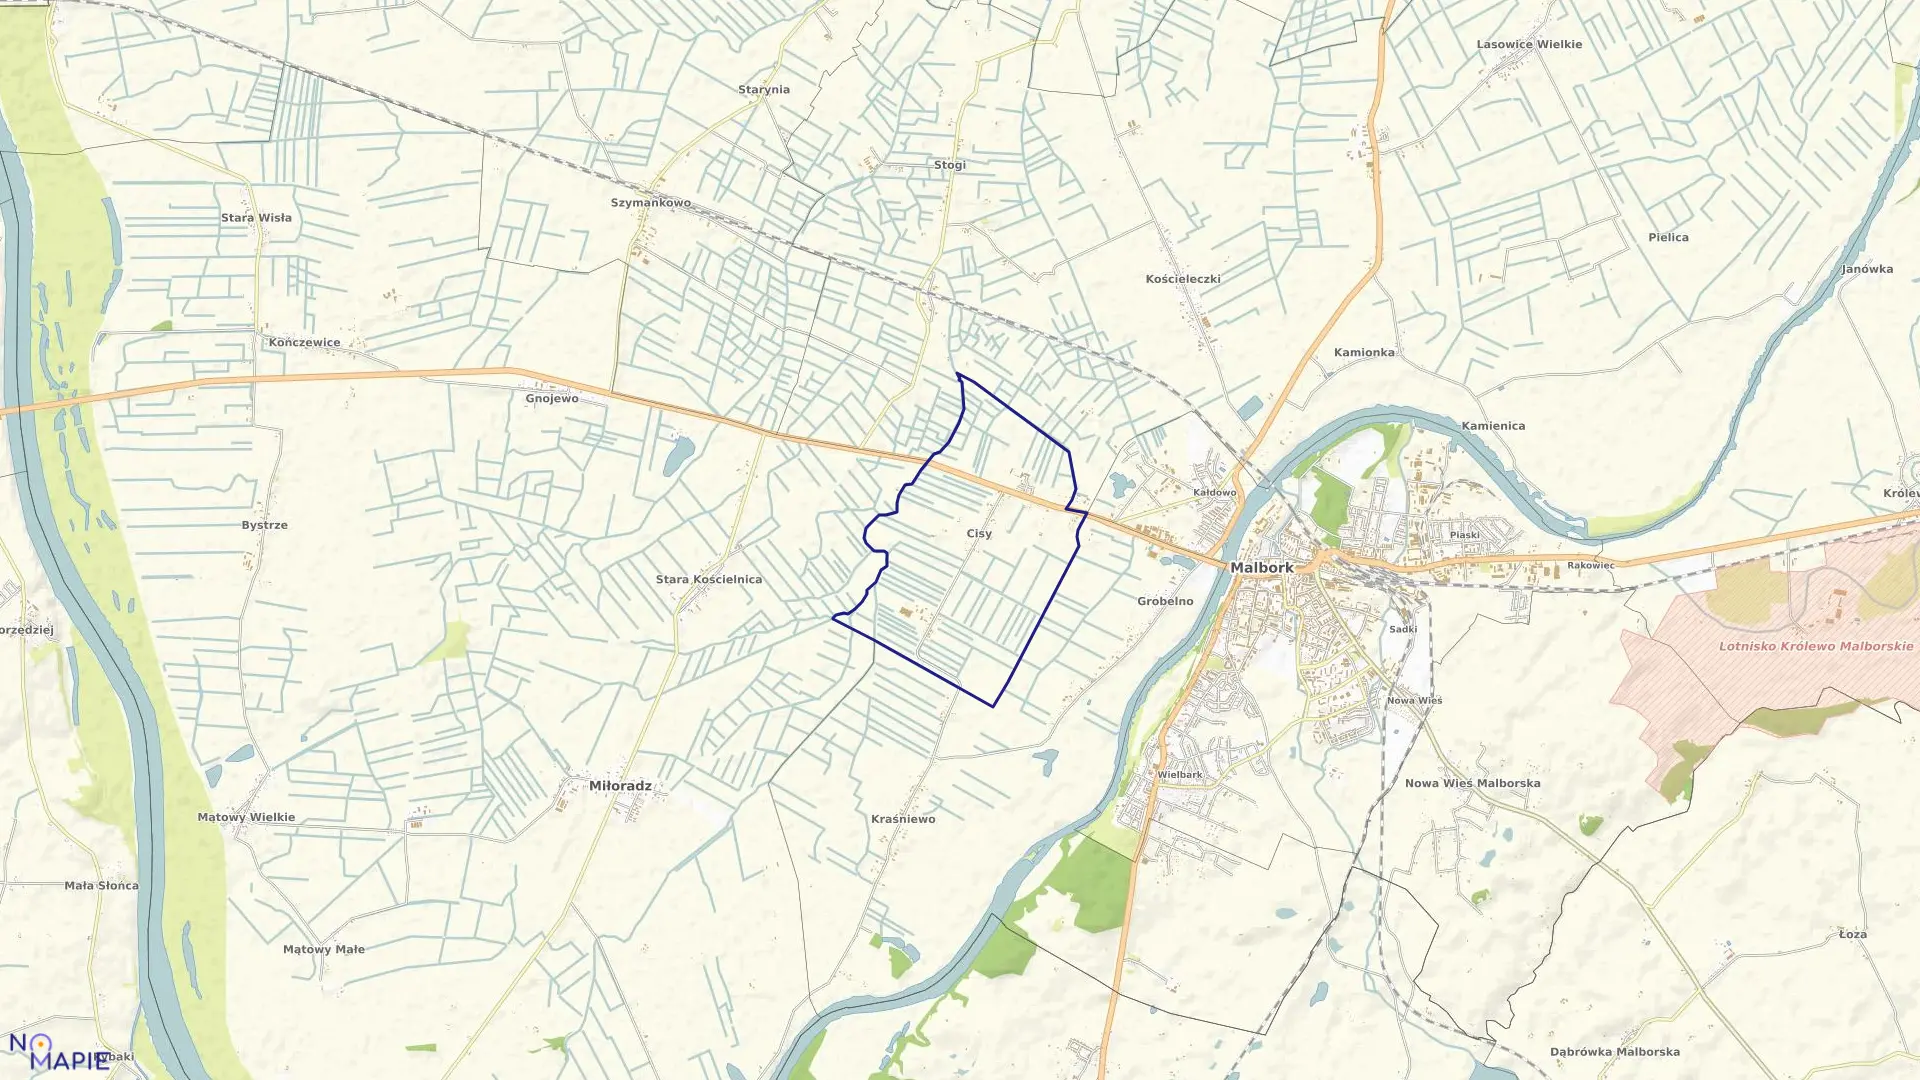 Mapa obrębu Cisy w gminie Malbork